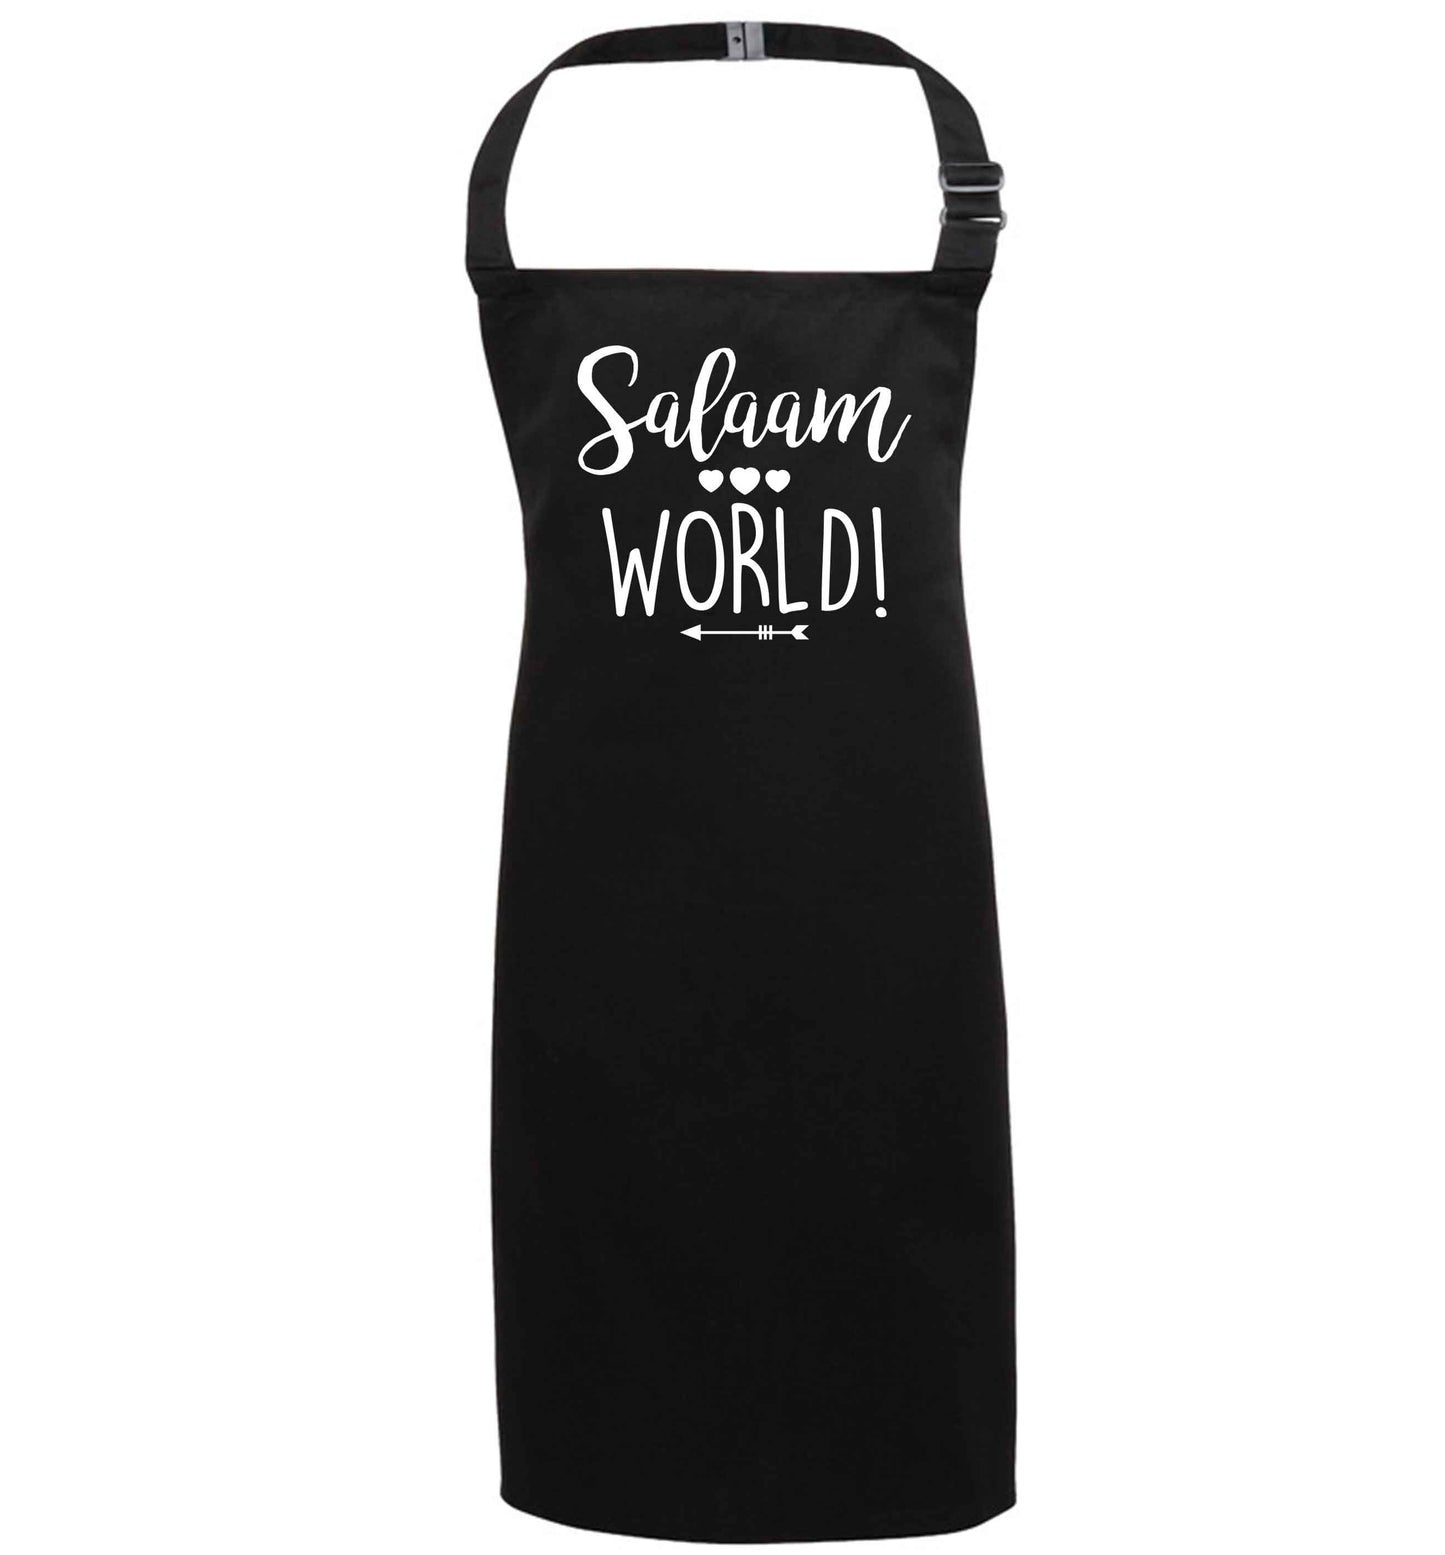 Salaam world black apron 7-10 years